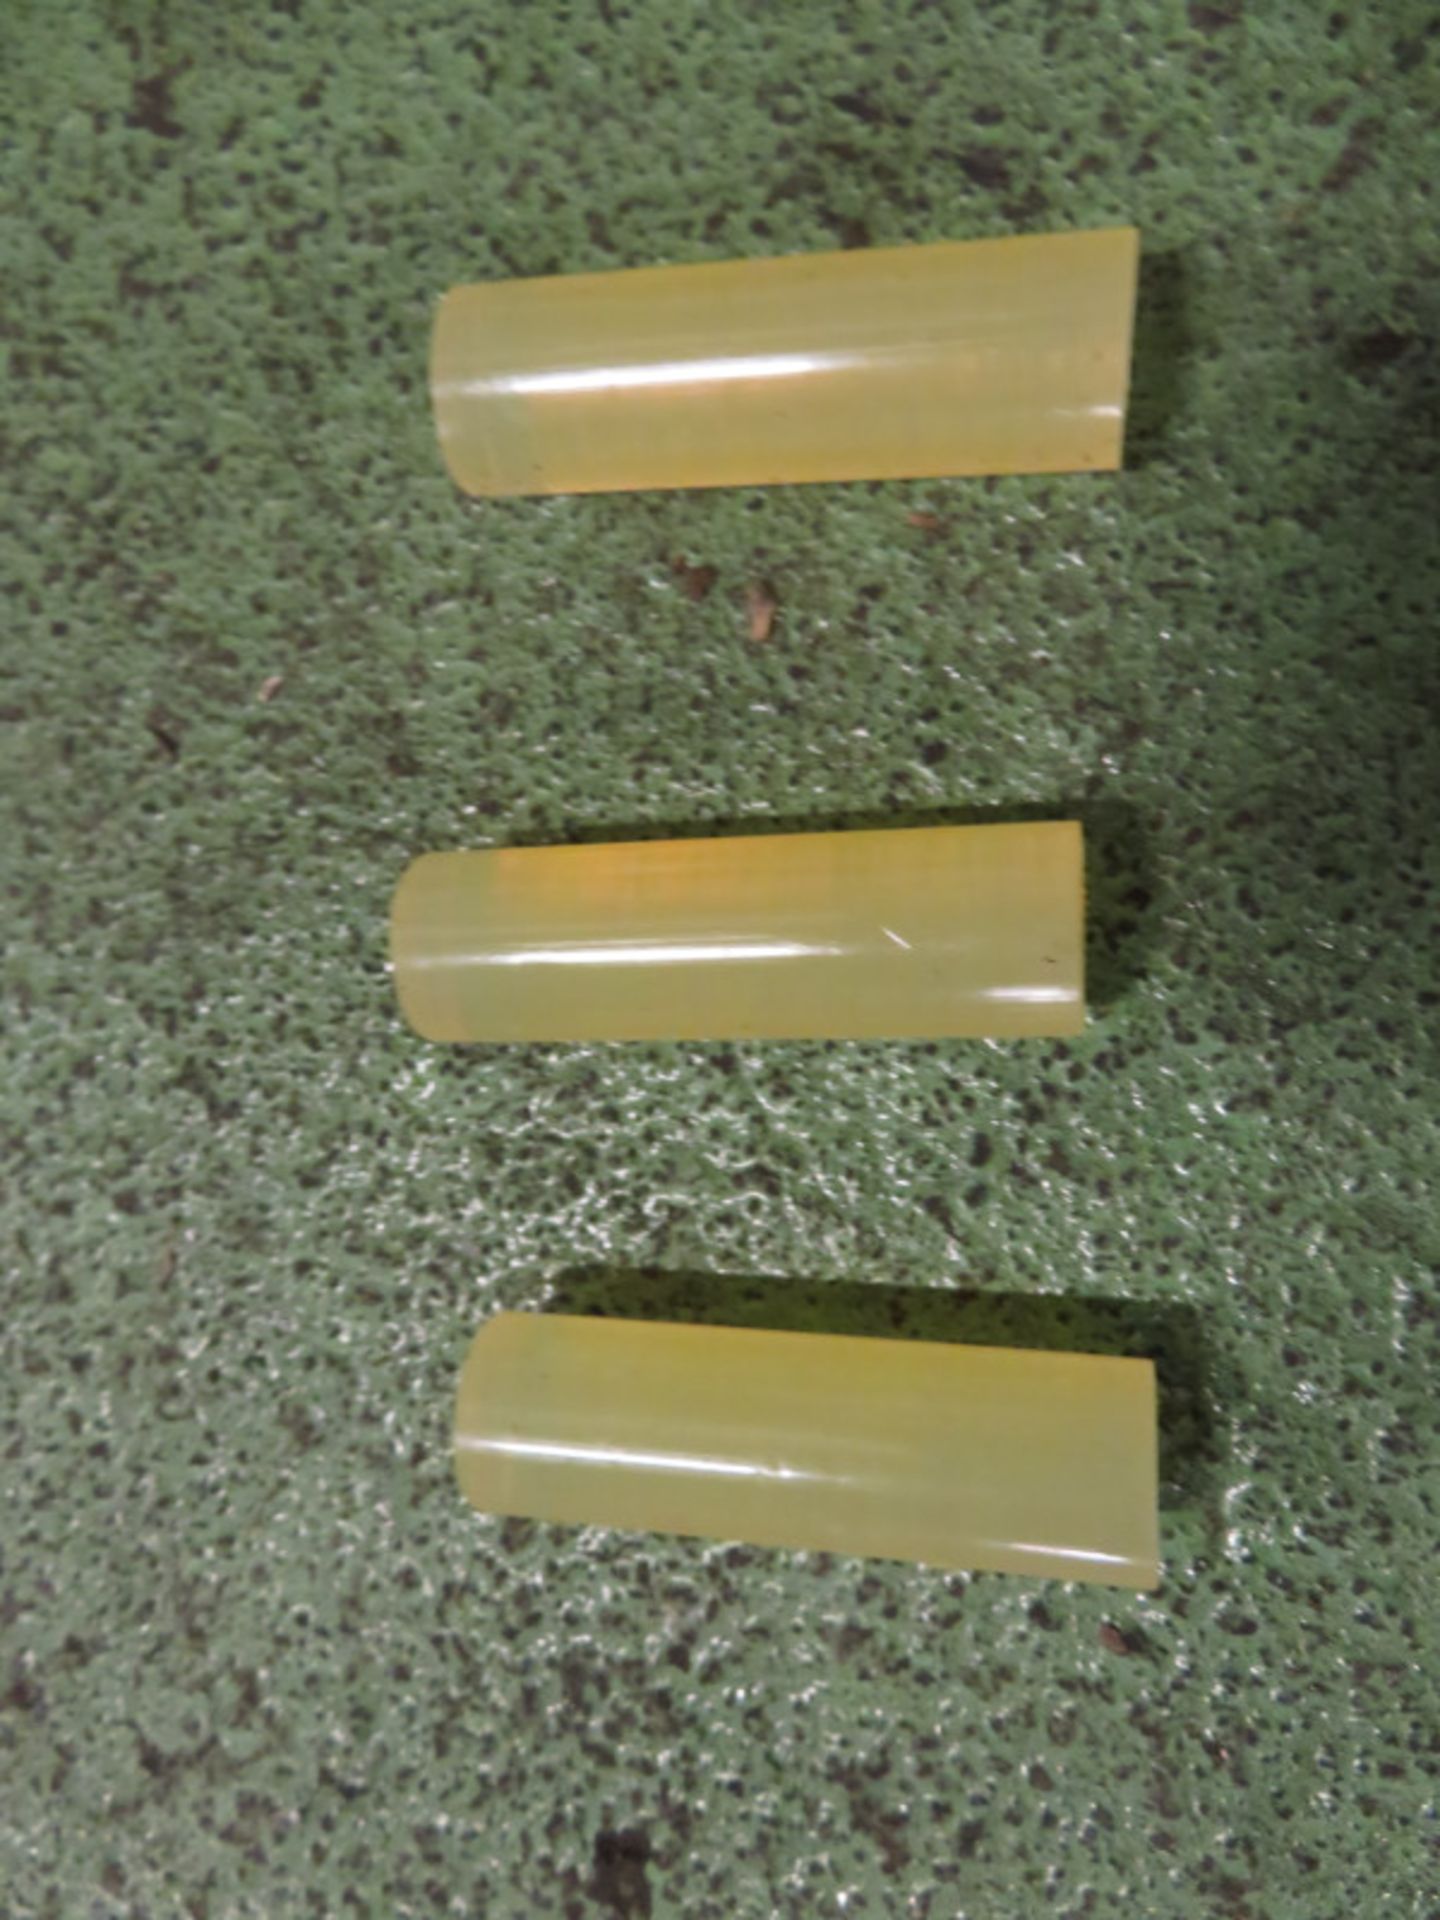 3M hot melt adhesive sticks 3738 TC - 5/8inch x 2inch - 5kg box - Image 2 of 2